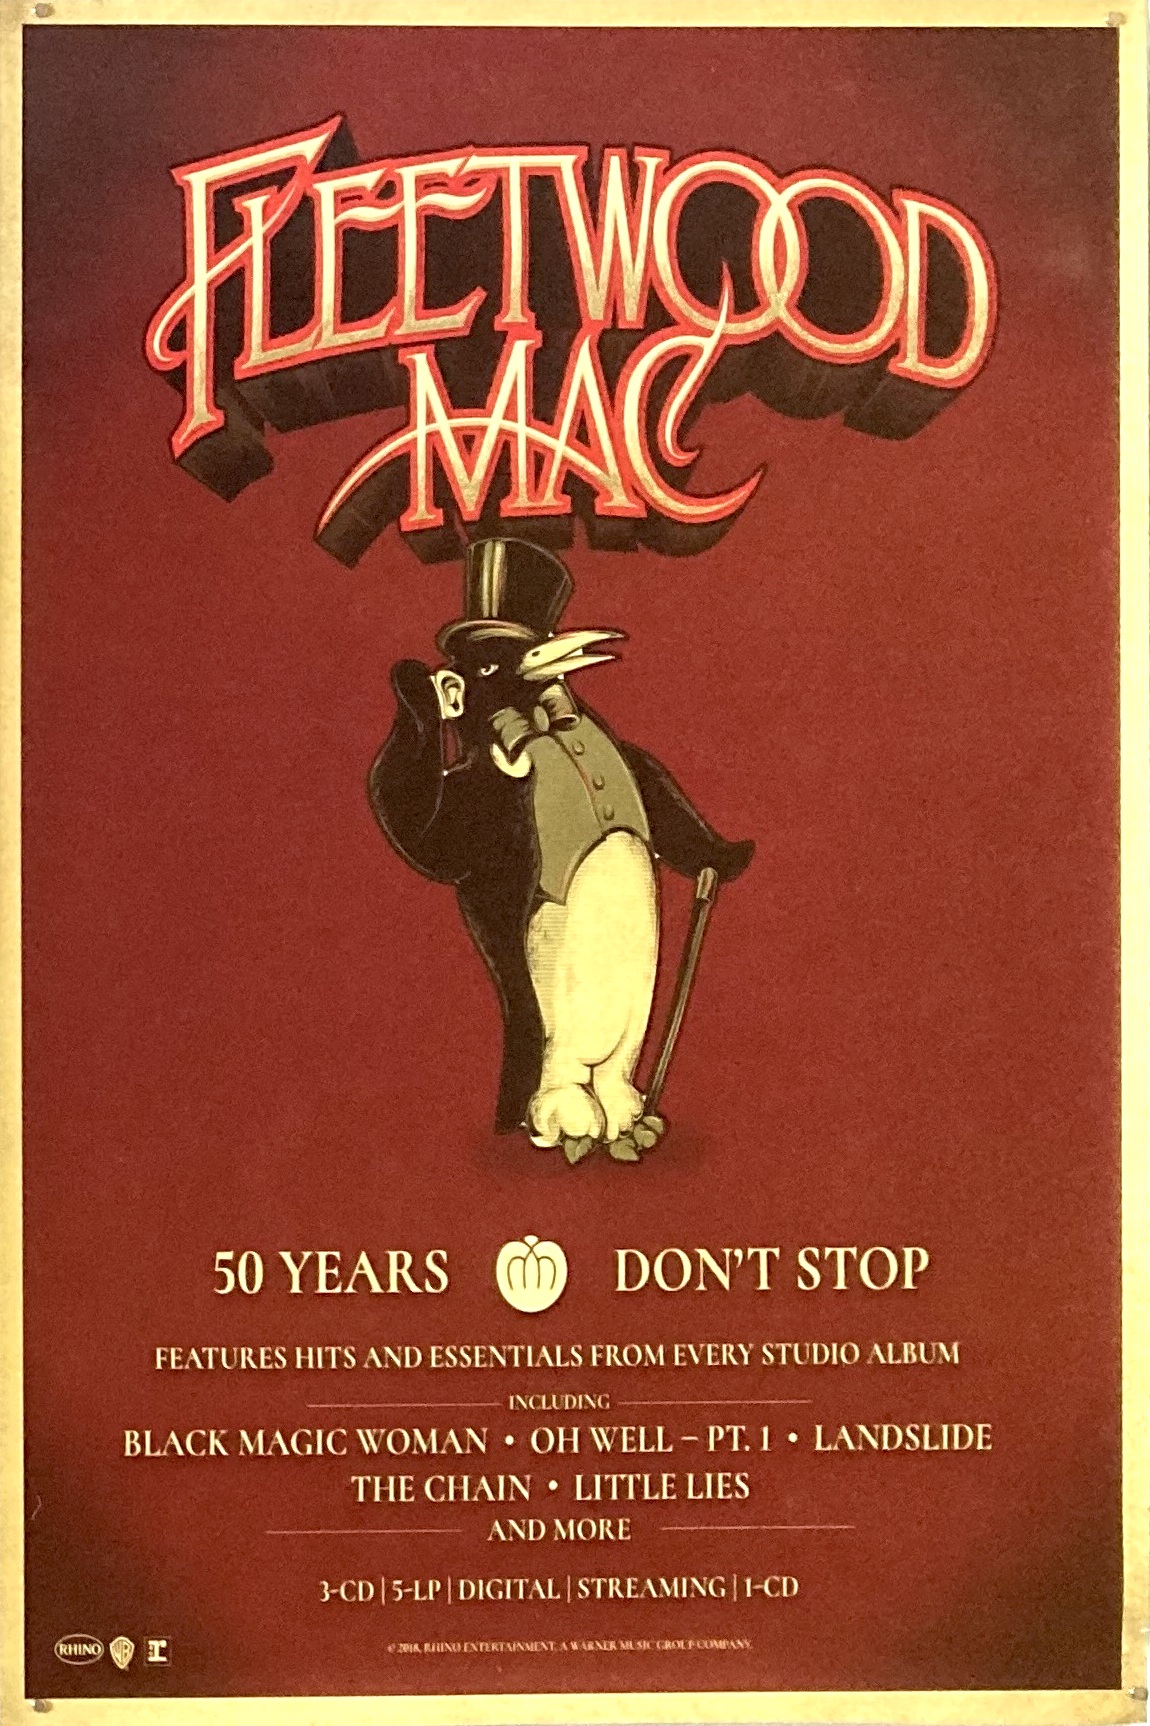 Fleetwood Mac's 50 Greatest Songs